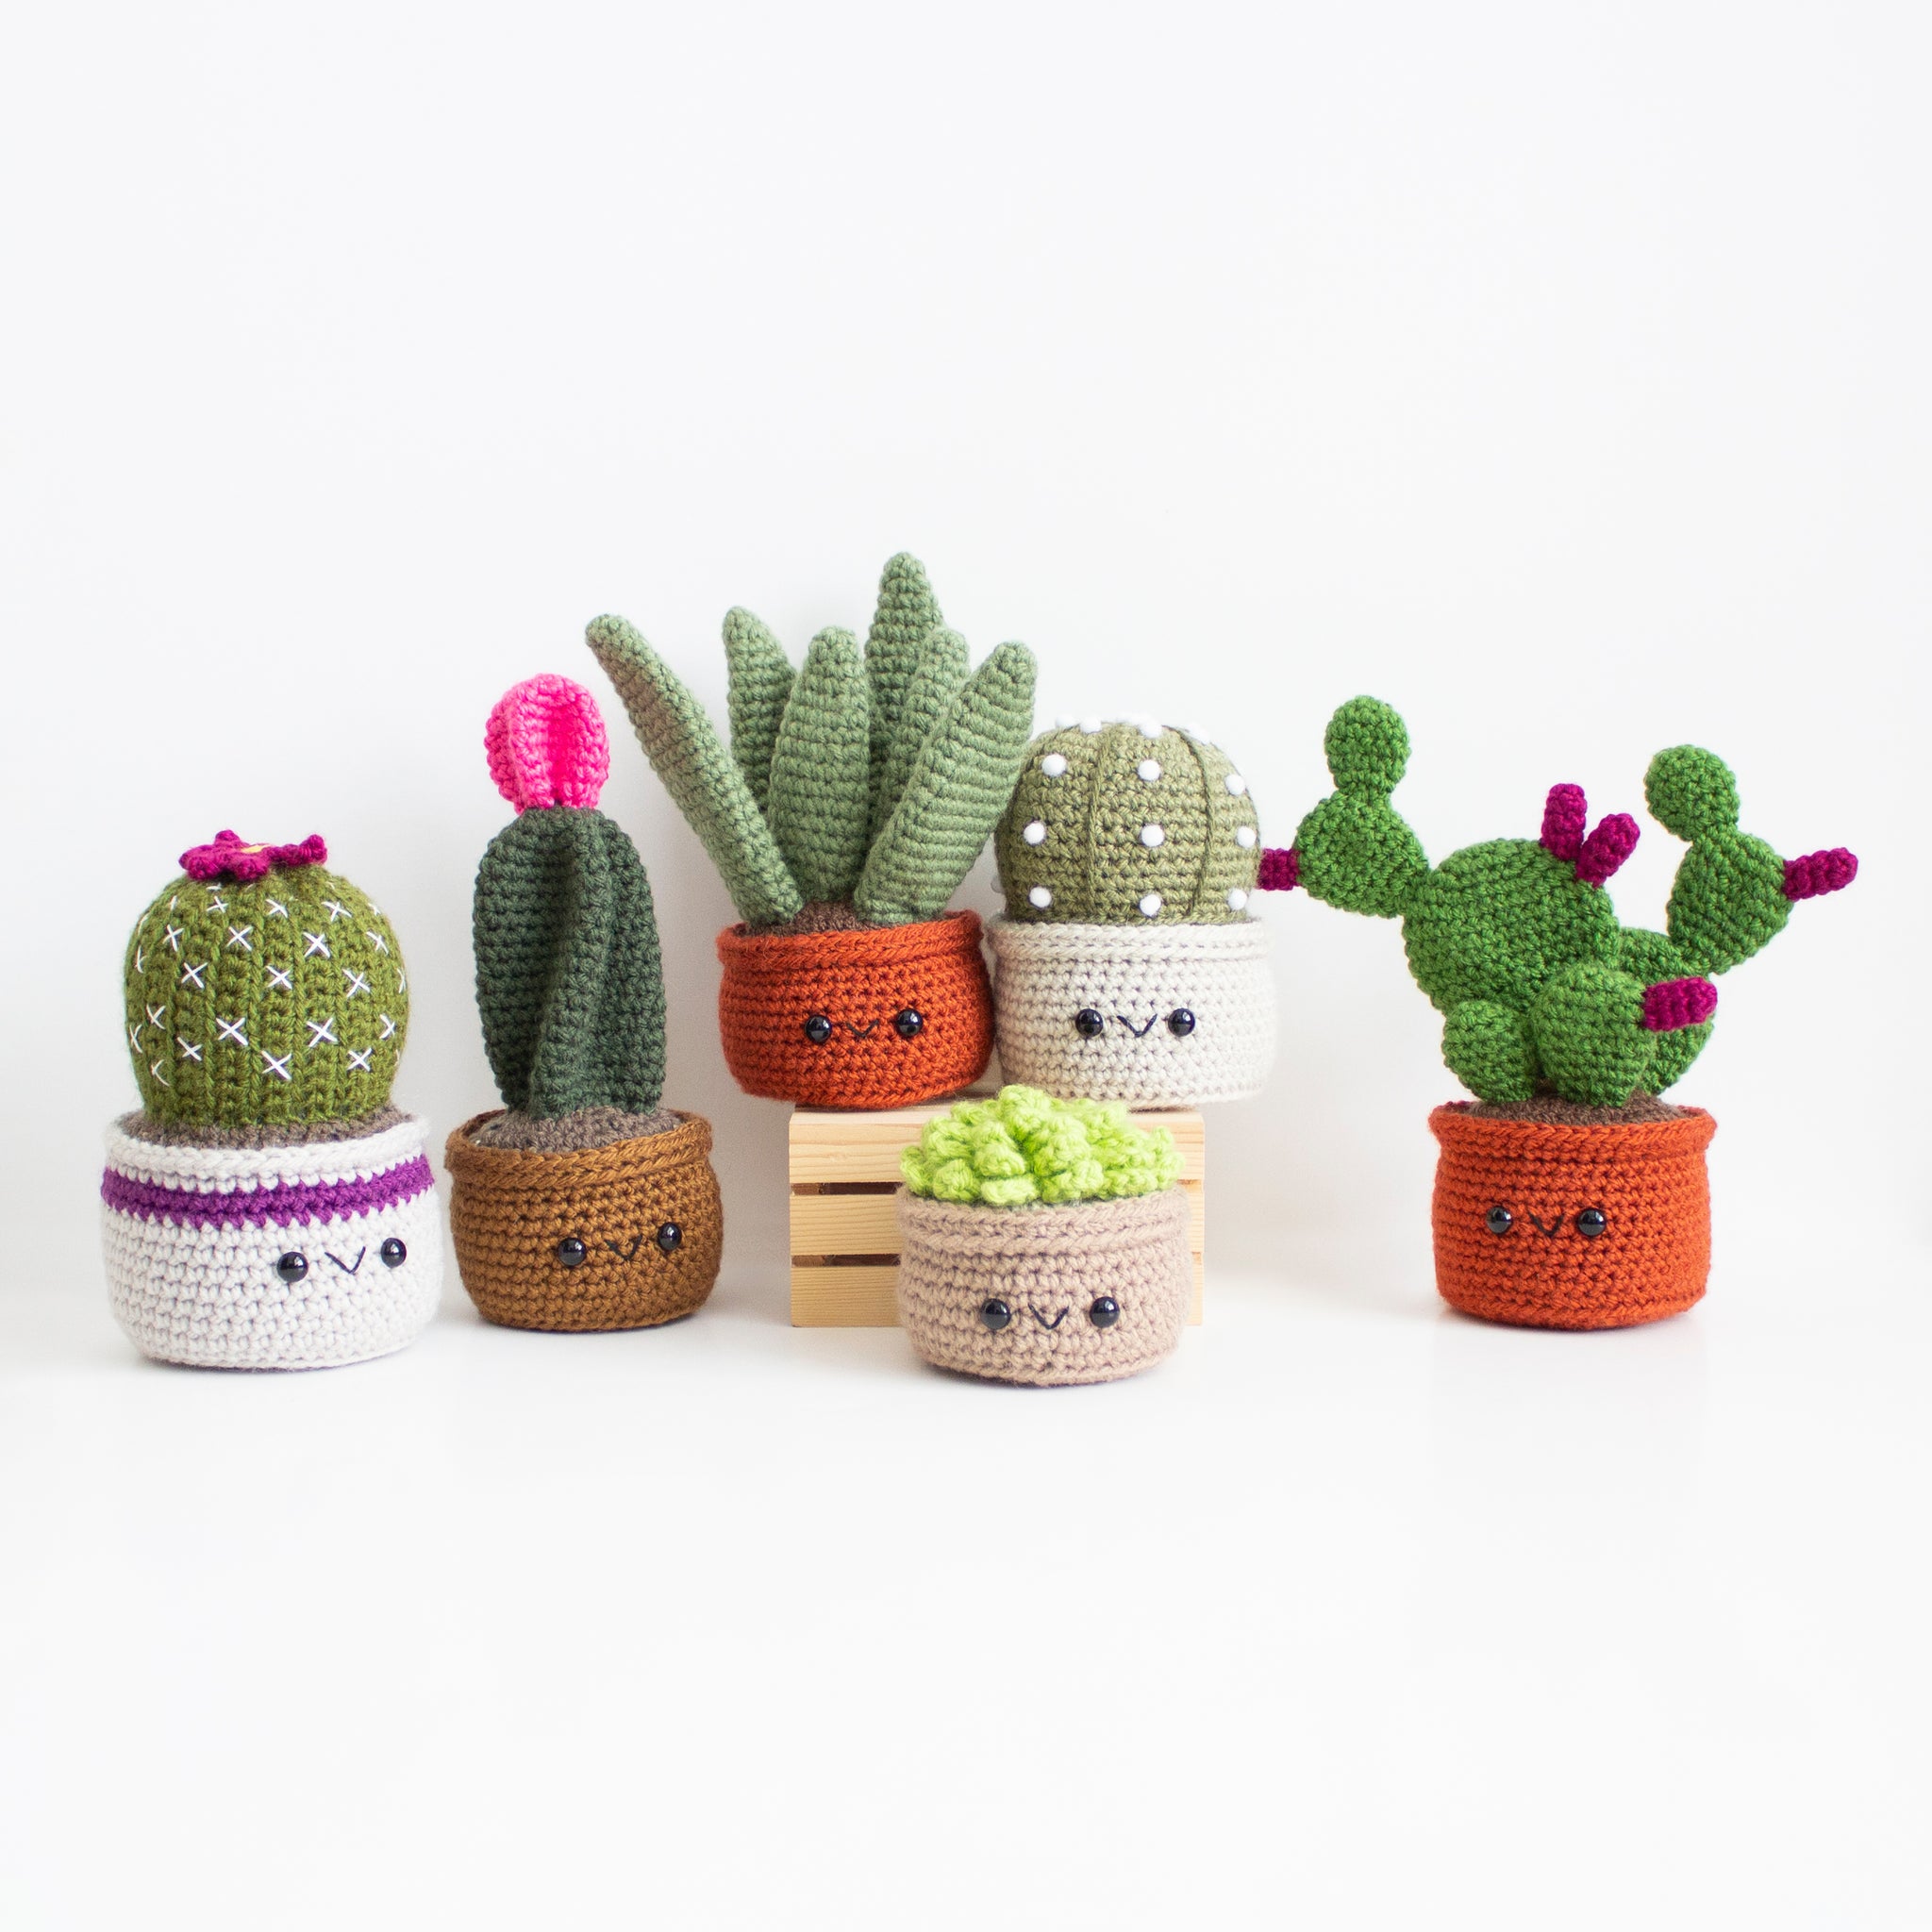 Succulent Cactus Crochet Pattern Pack - Amigurumi House Plants v1 - Desert